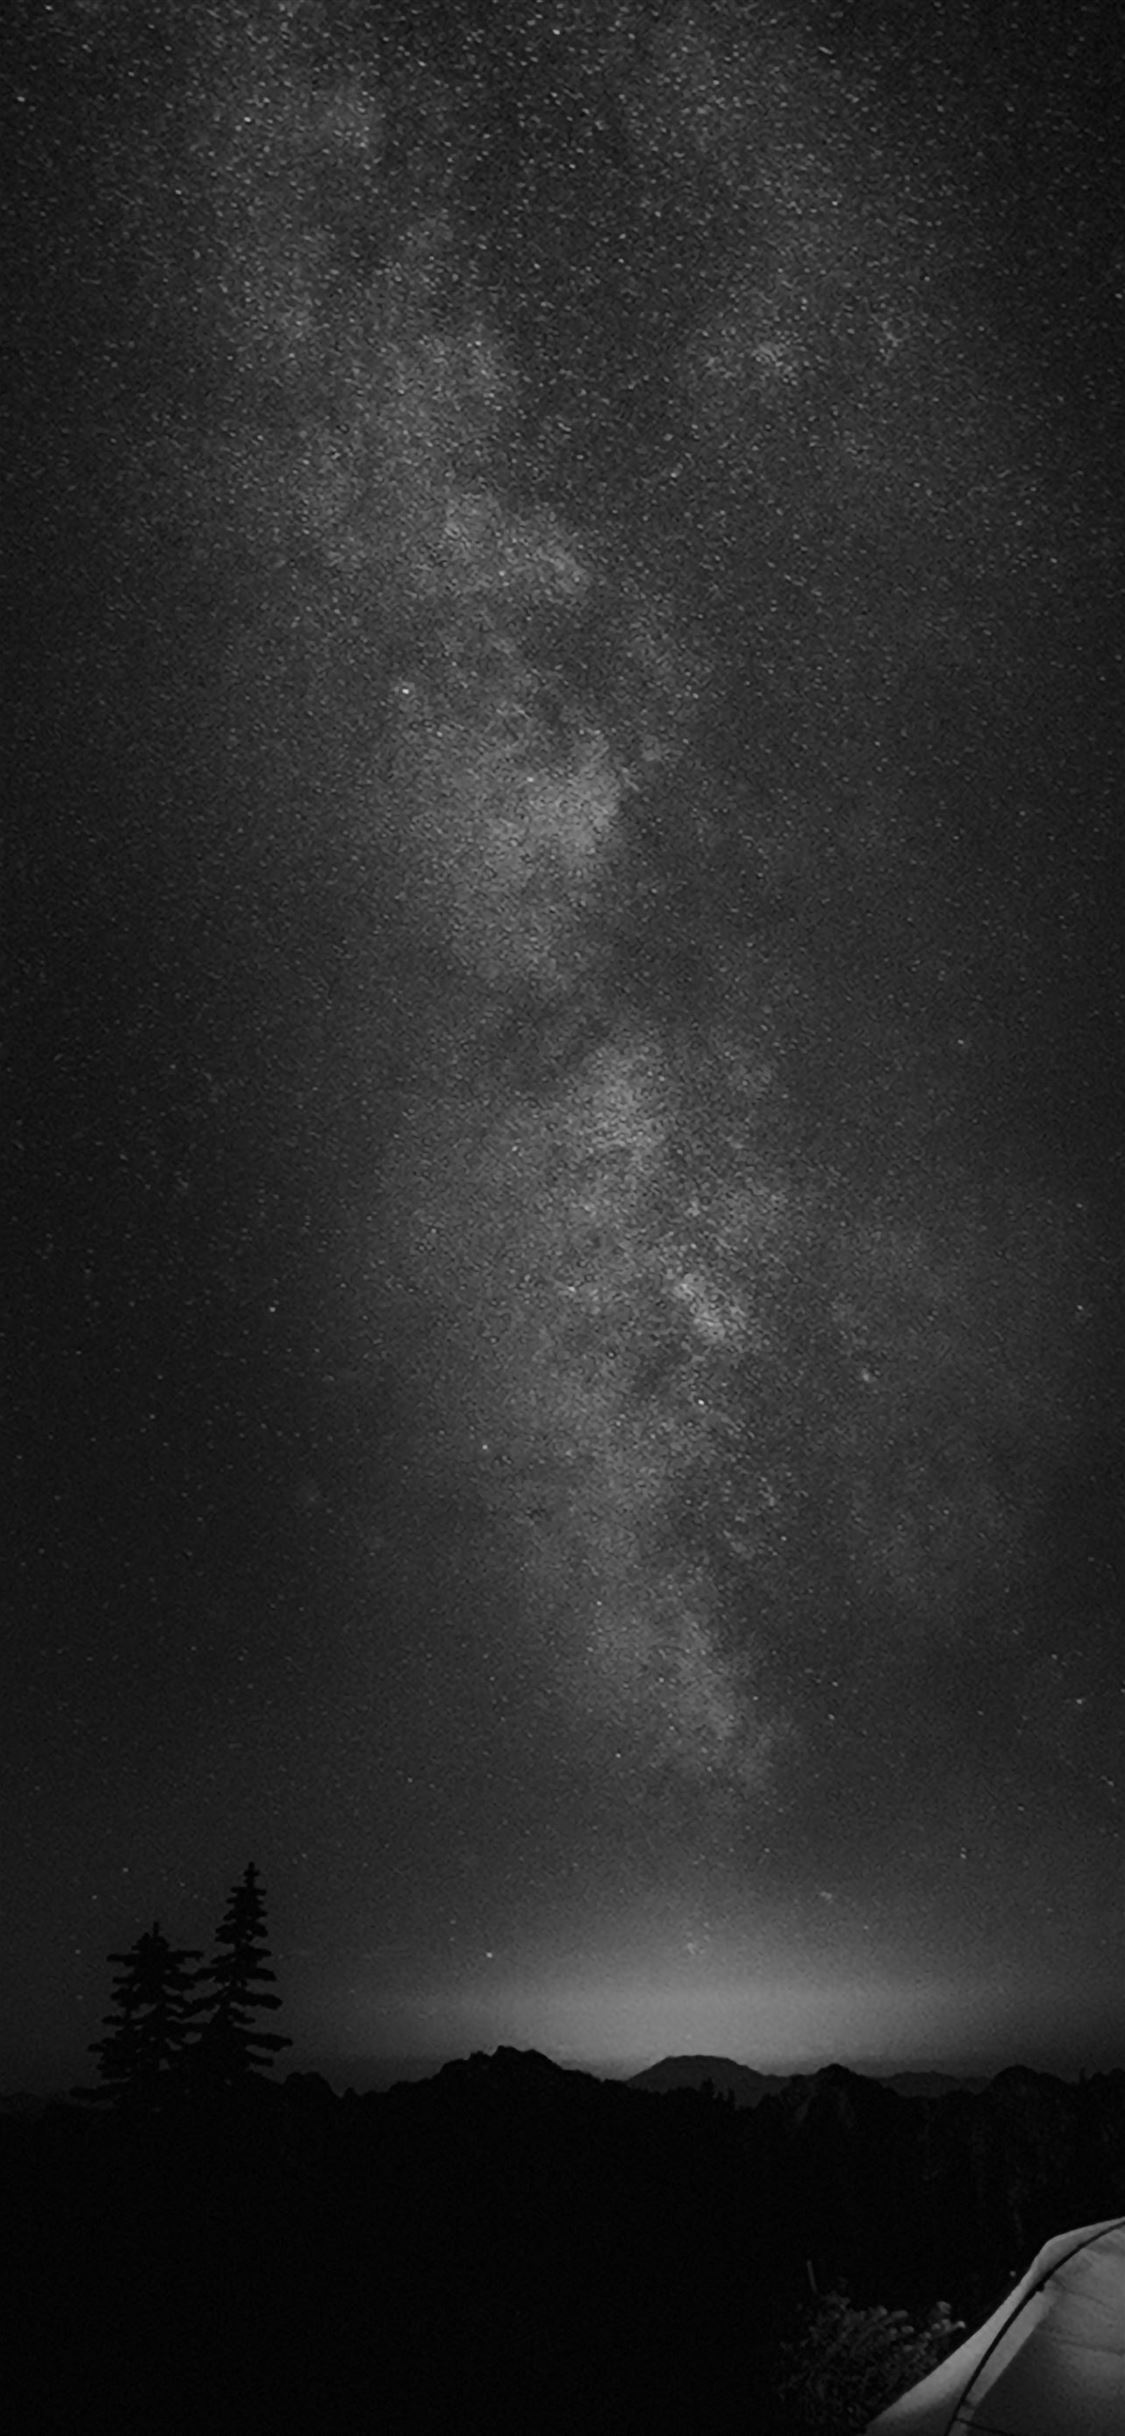 Camping Night Star Galaxy Milky Sky Dark Space Bw iPhone wallpaper 